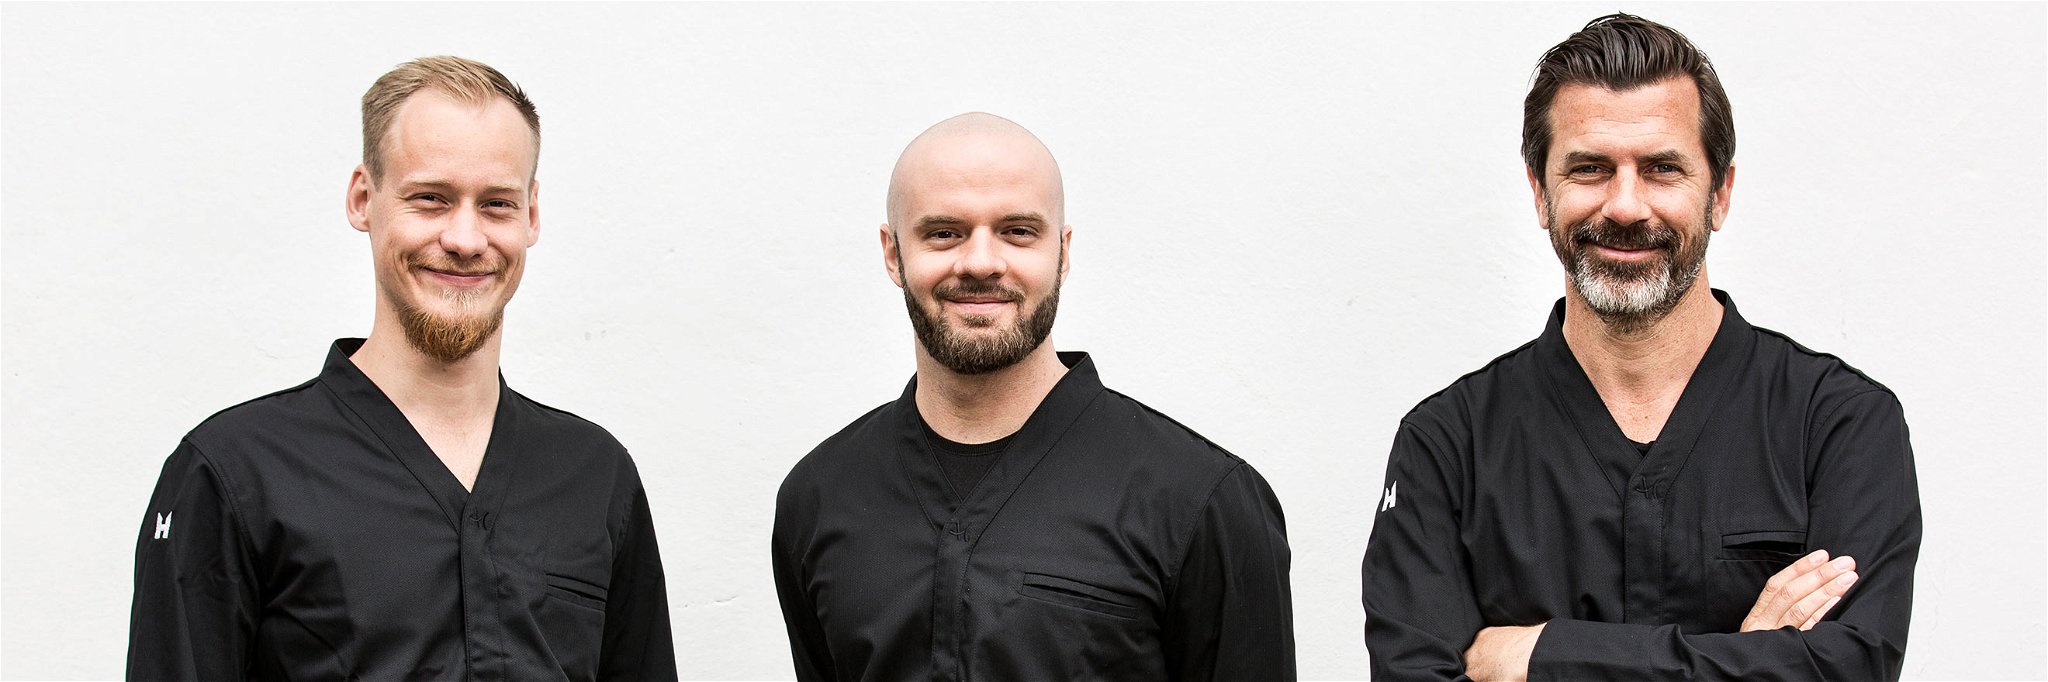 «Igniv»-Gründer Andreas Caminada (r.) mit Chefkoch David Hartwig (m.) und Chef-Patissier Arne Riehn (l.)